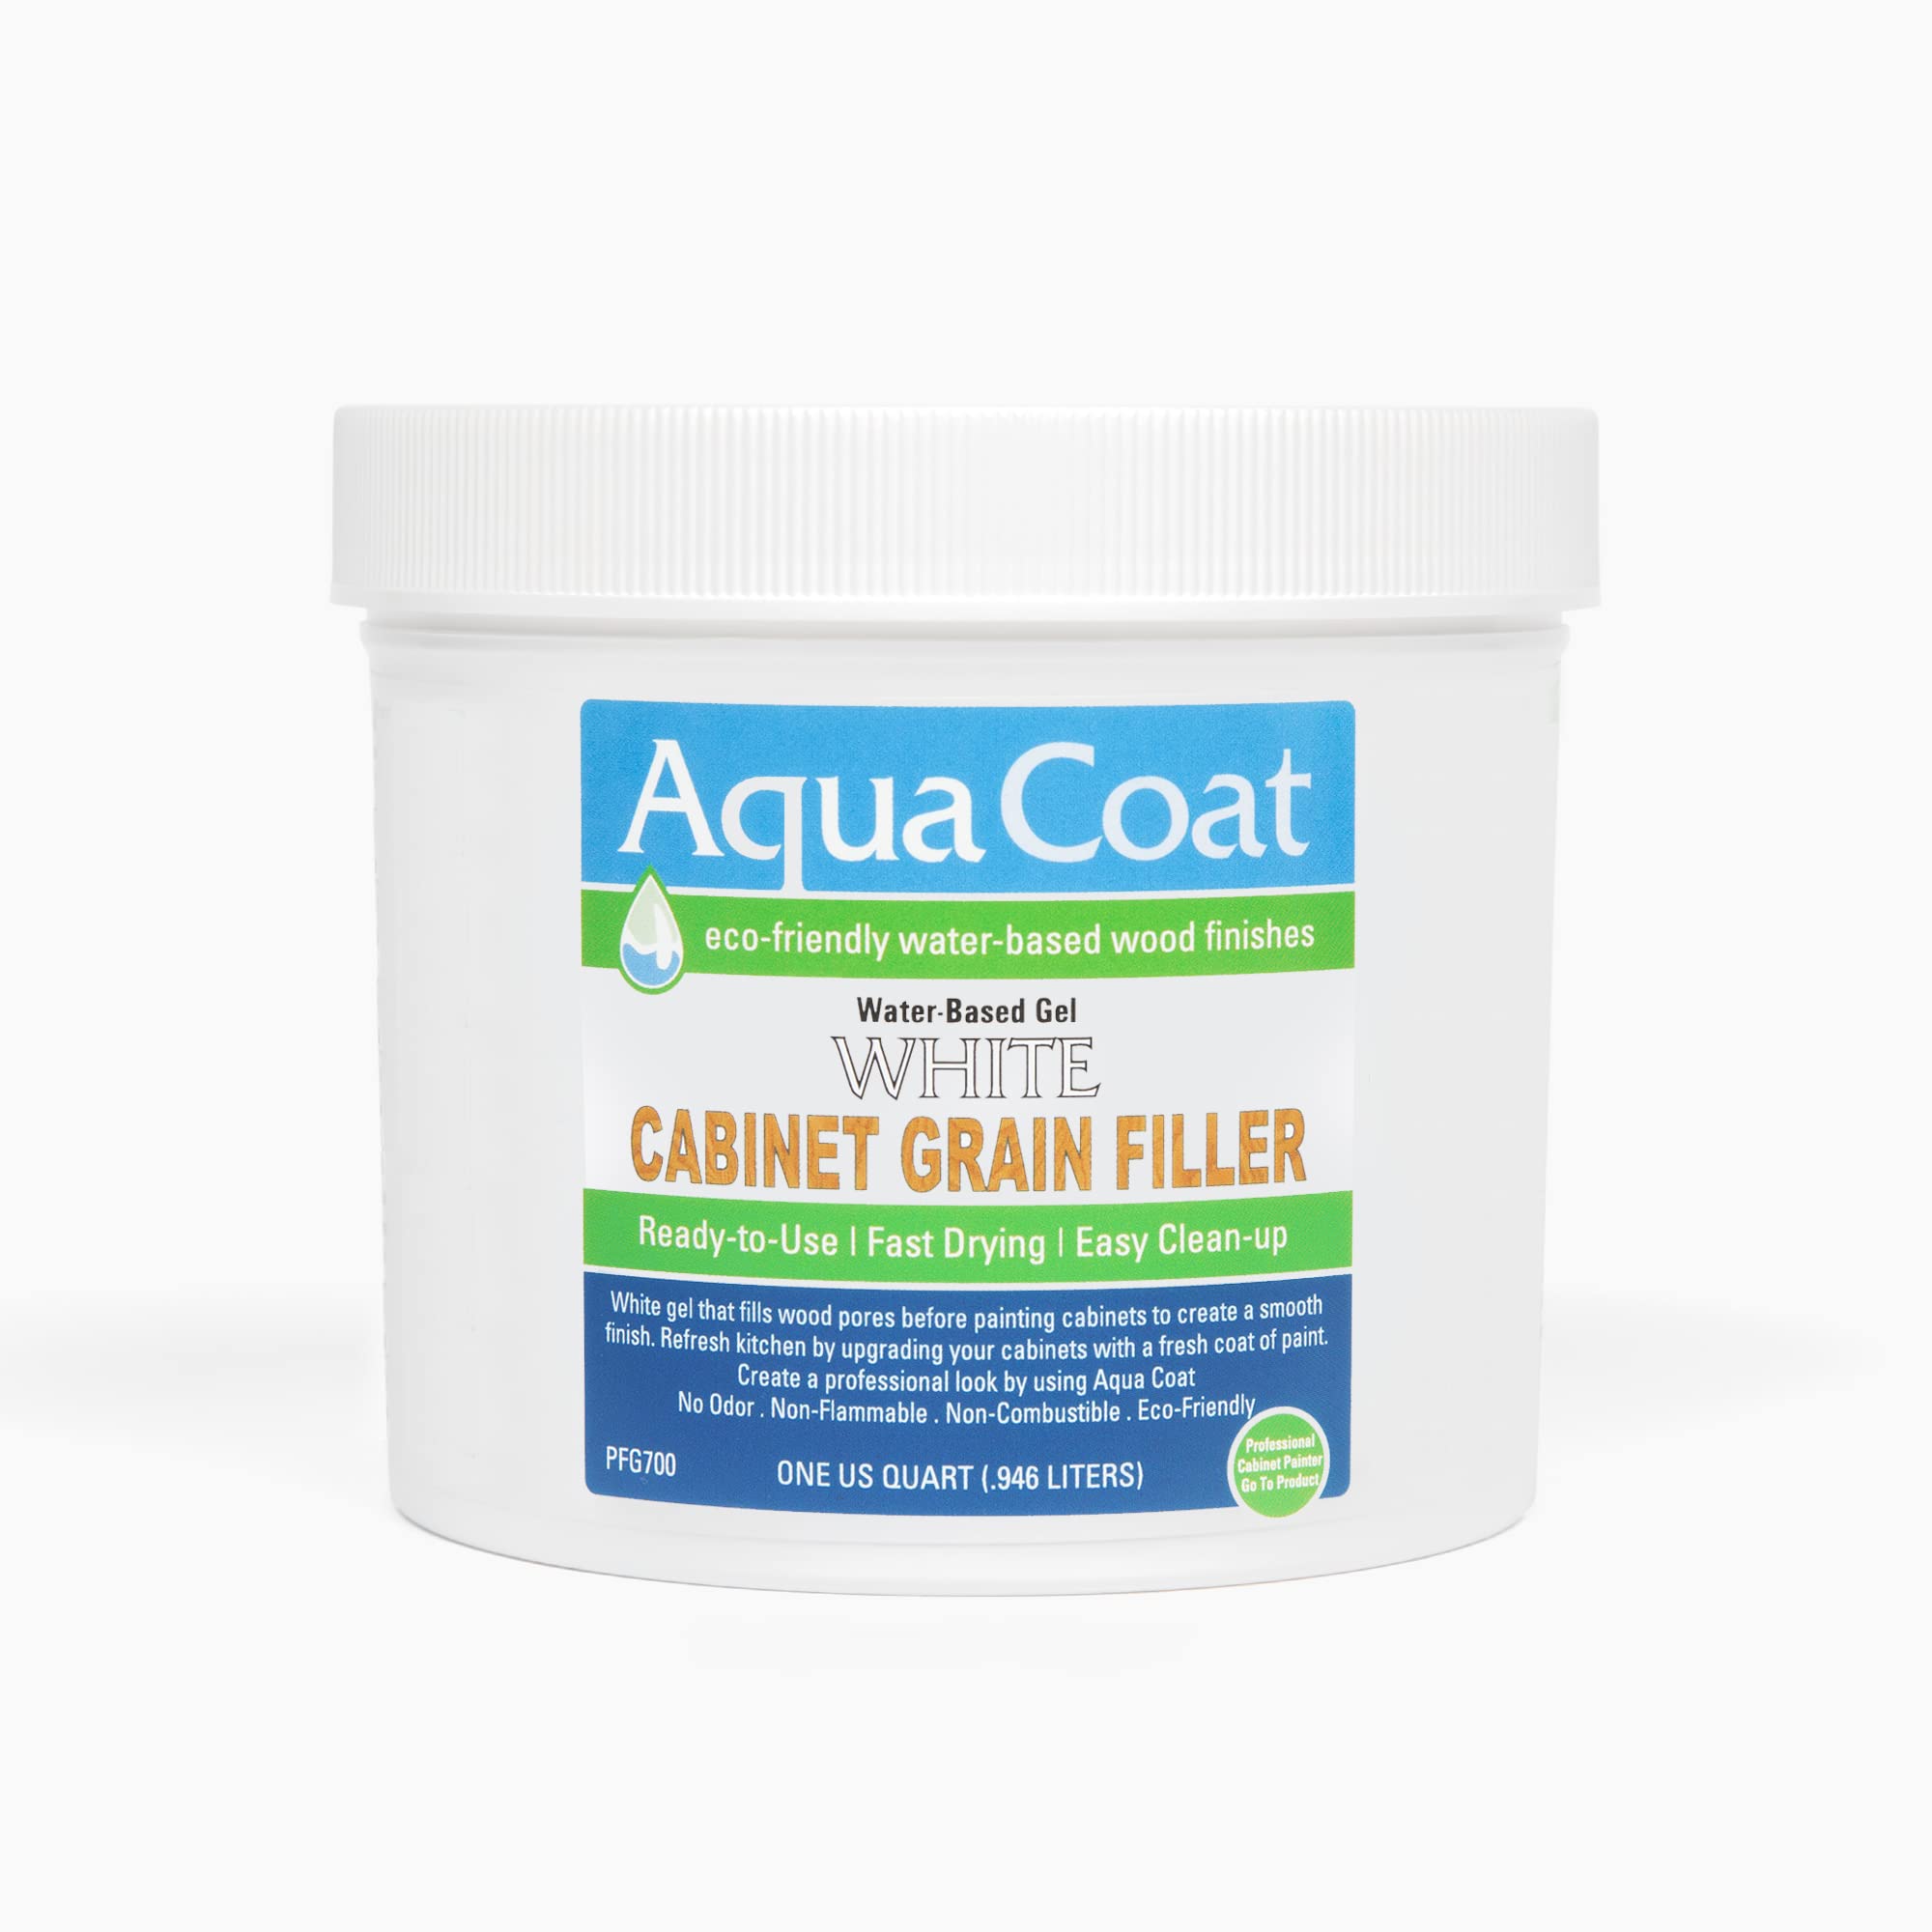 Aqua Coat Water Based White Cabinet Grain Filler Gel, Fast Drying, Low Odor White Wood Grain Filler, Premium Cabinet Grain Fille